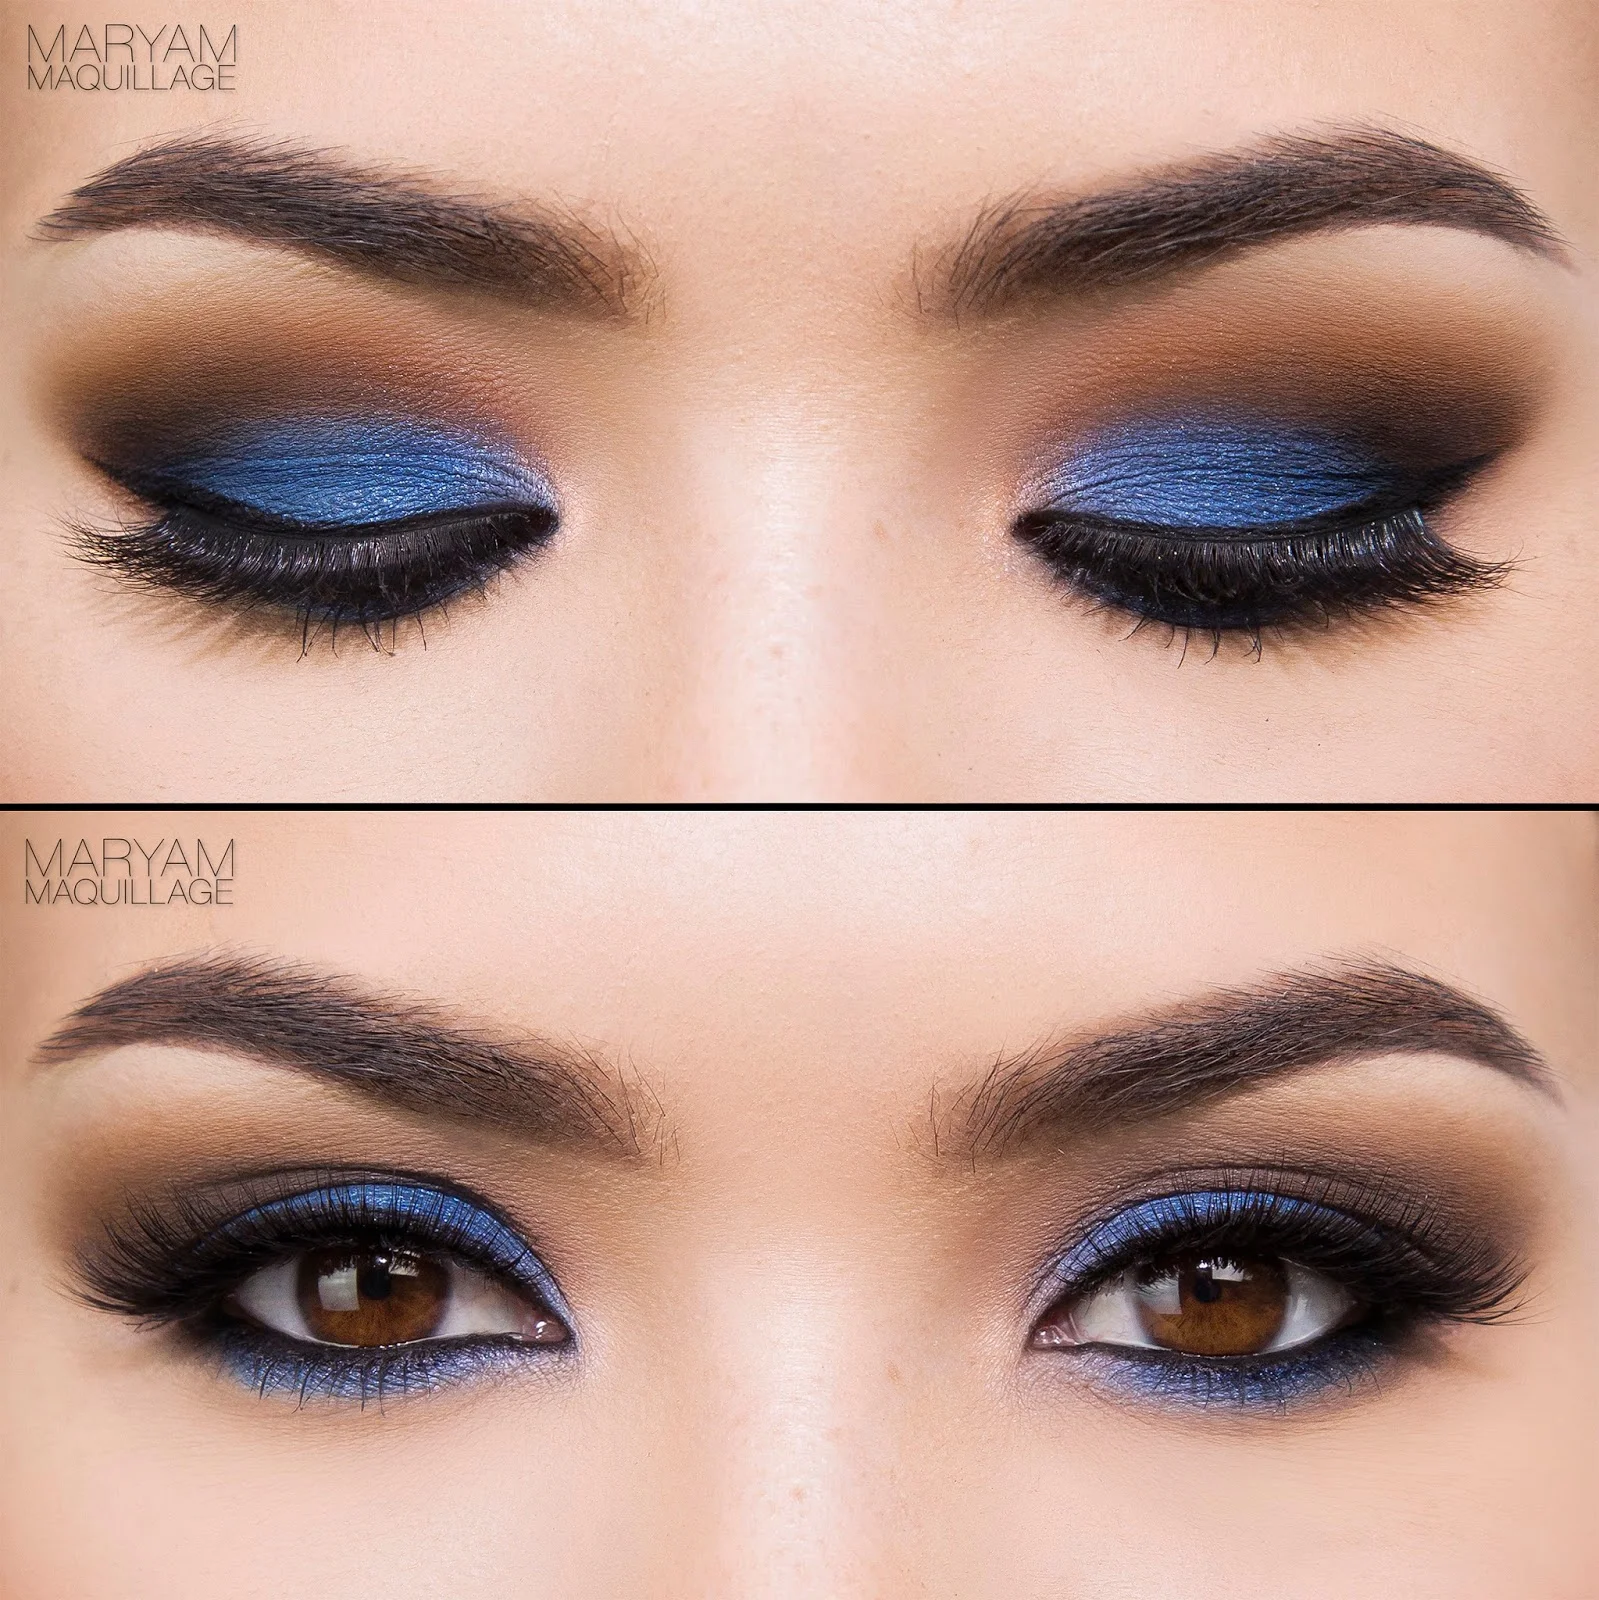 Maryam Maquillage Pop Of Color 2 Makeup Looks Tutorials